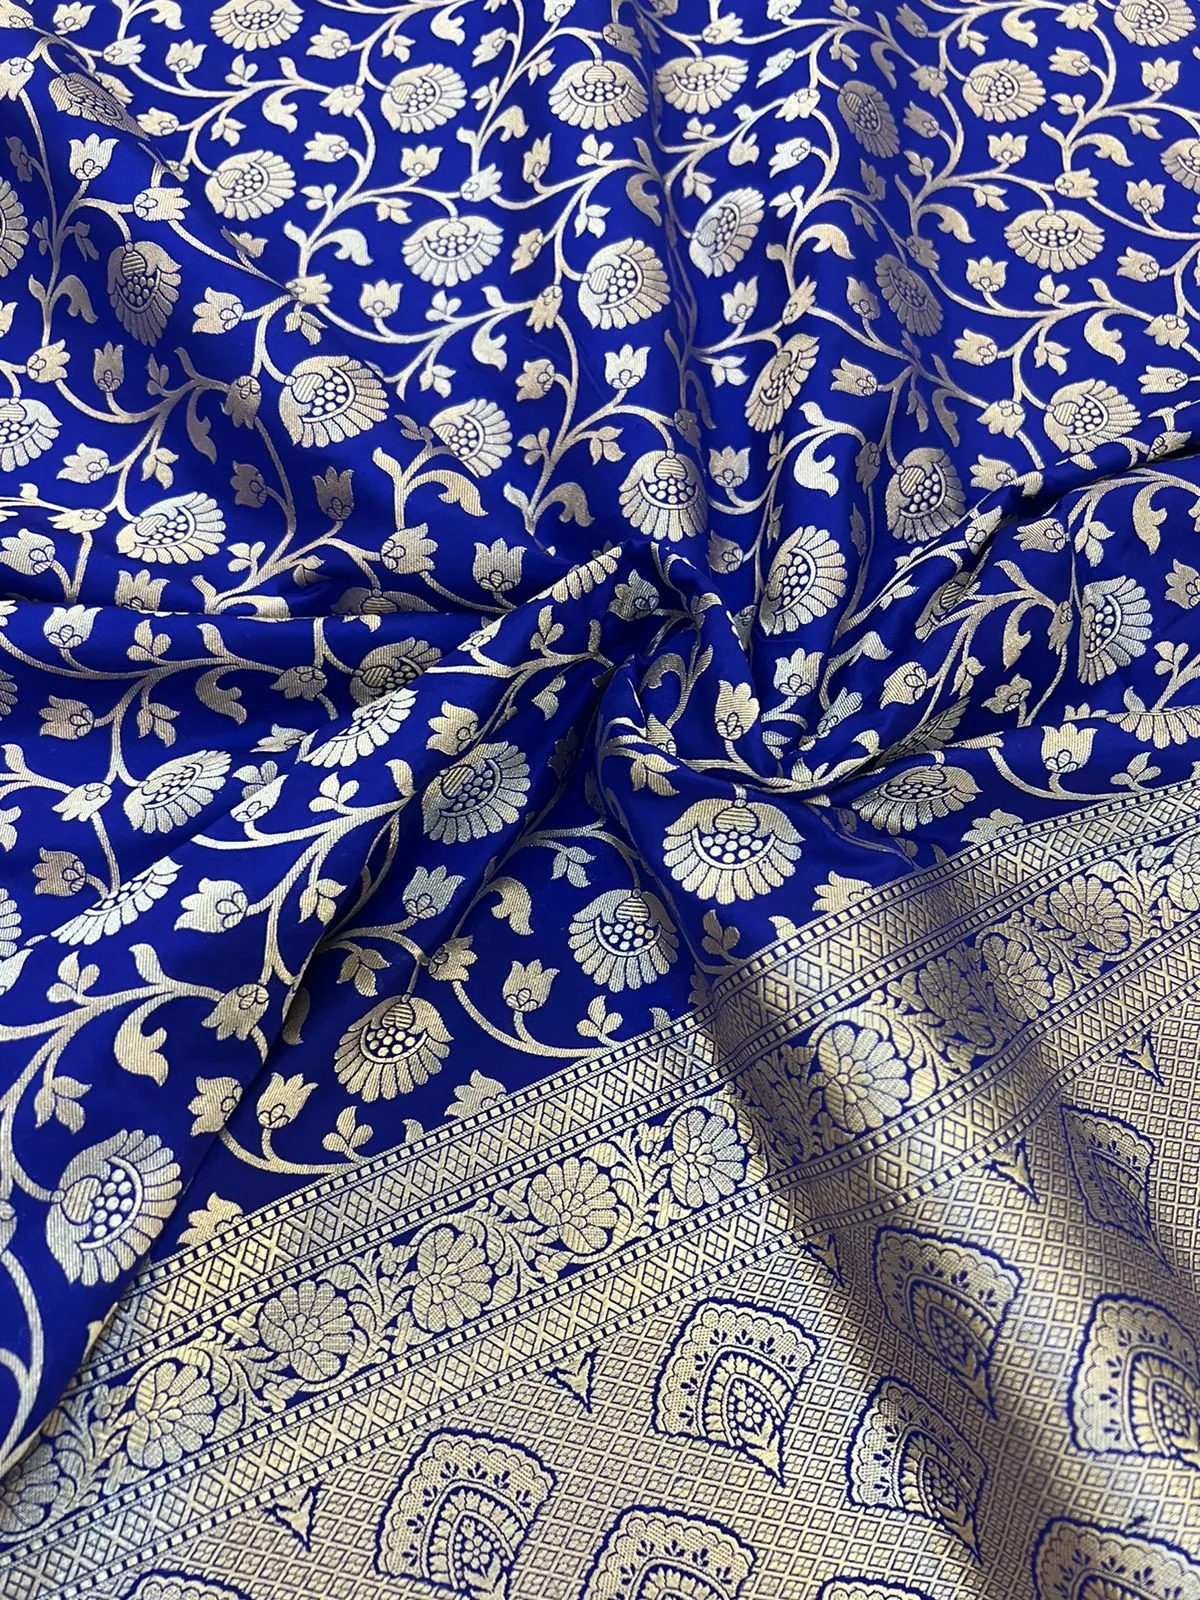 Designer banarsi saree in a wide range 